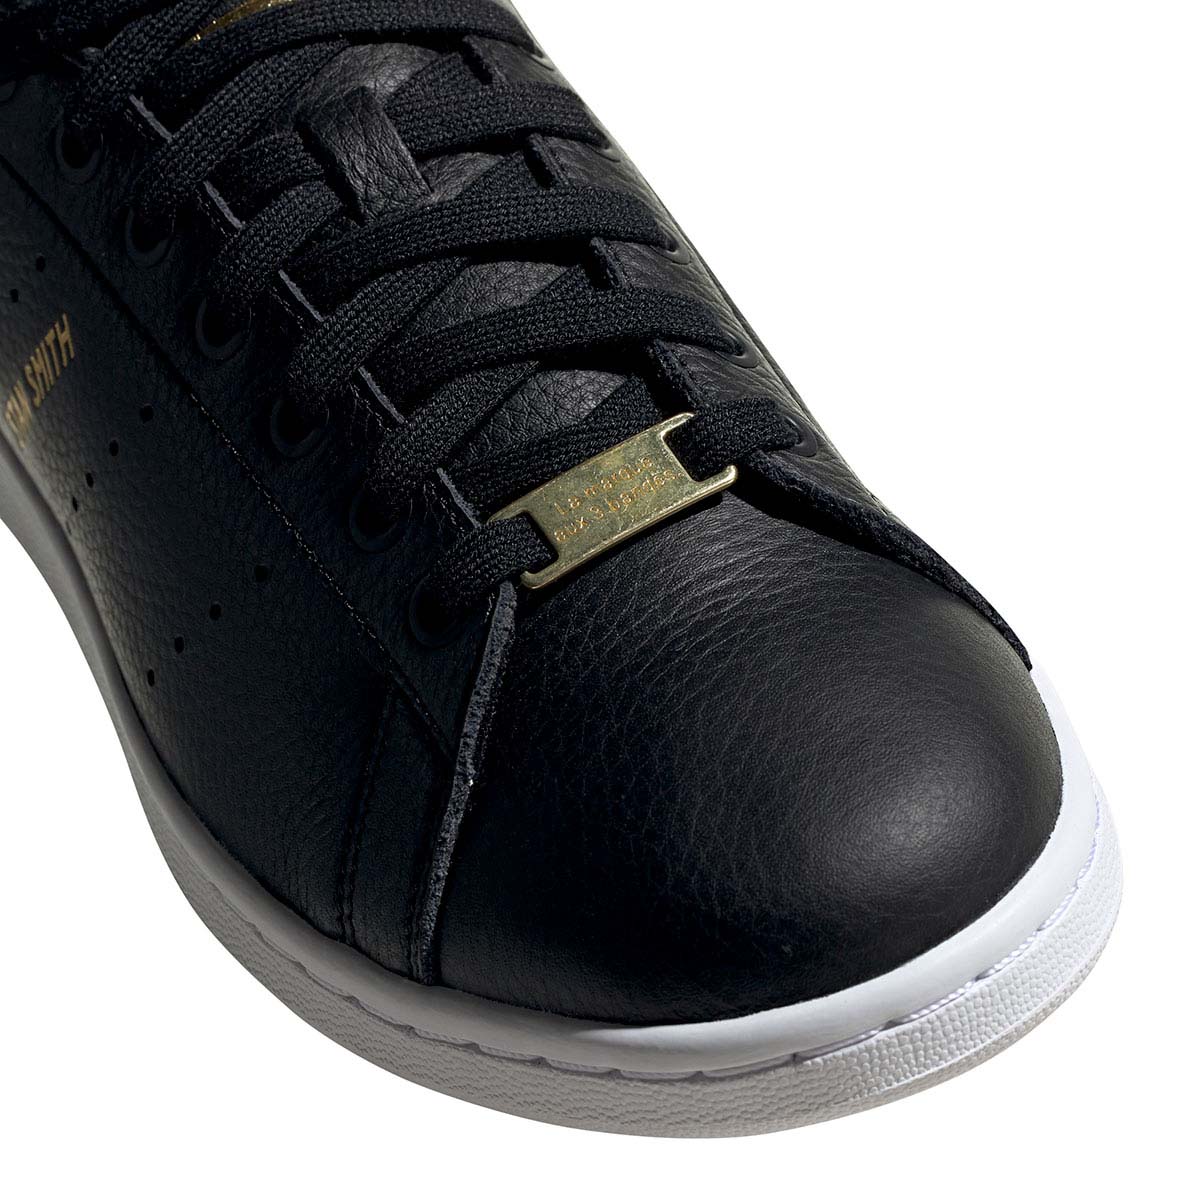 adidas STAN SMITH CORE BLACK / CORE BLACK / FOOTWEAR WHITE EH1476 アディダス スタンスミス ブラック/ホワイト